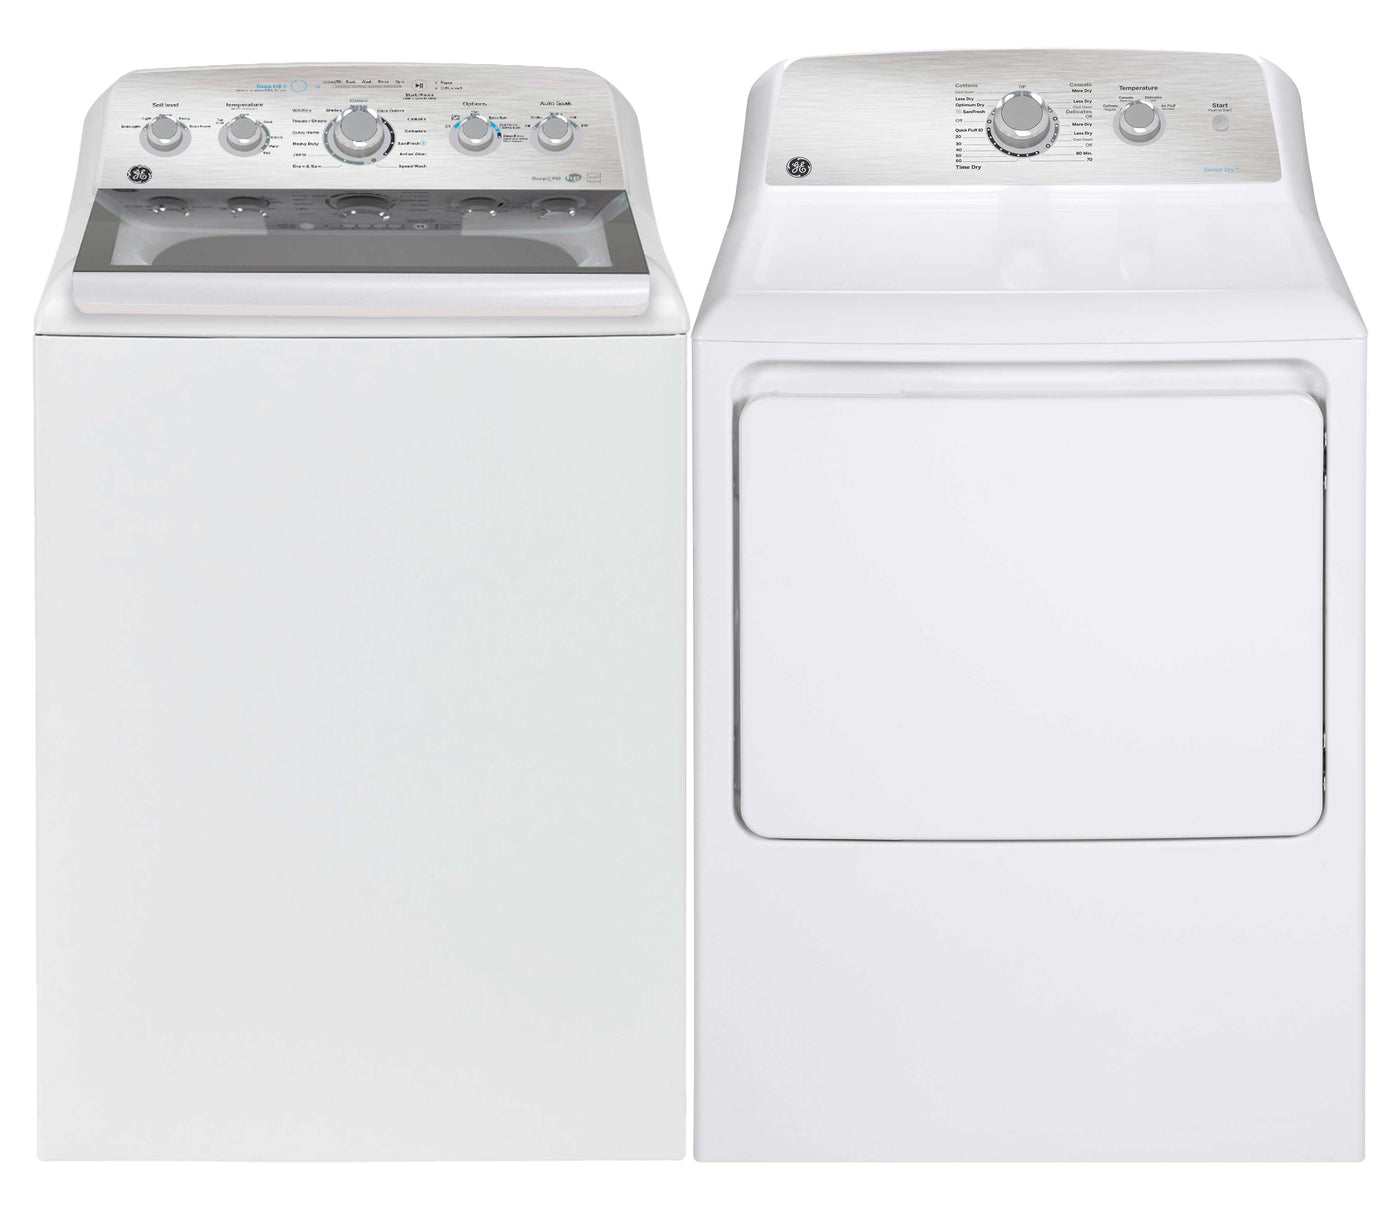 GE White Top-Load Washer (5.0 cu. ft.) & Gas Dryer (7.2 cu. ft.) - GTW580BMRWS/GTD40GBMRWS